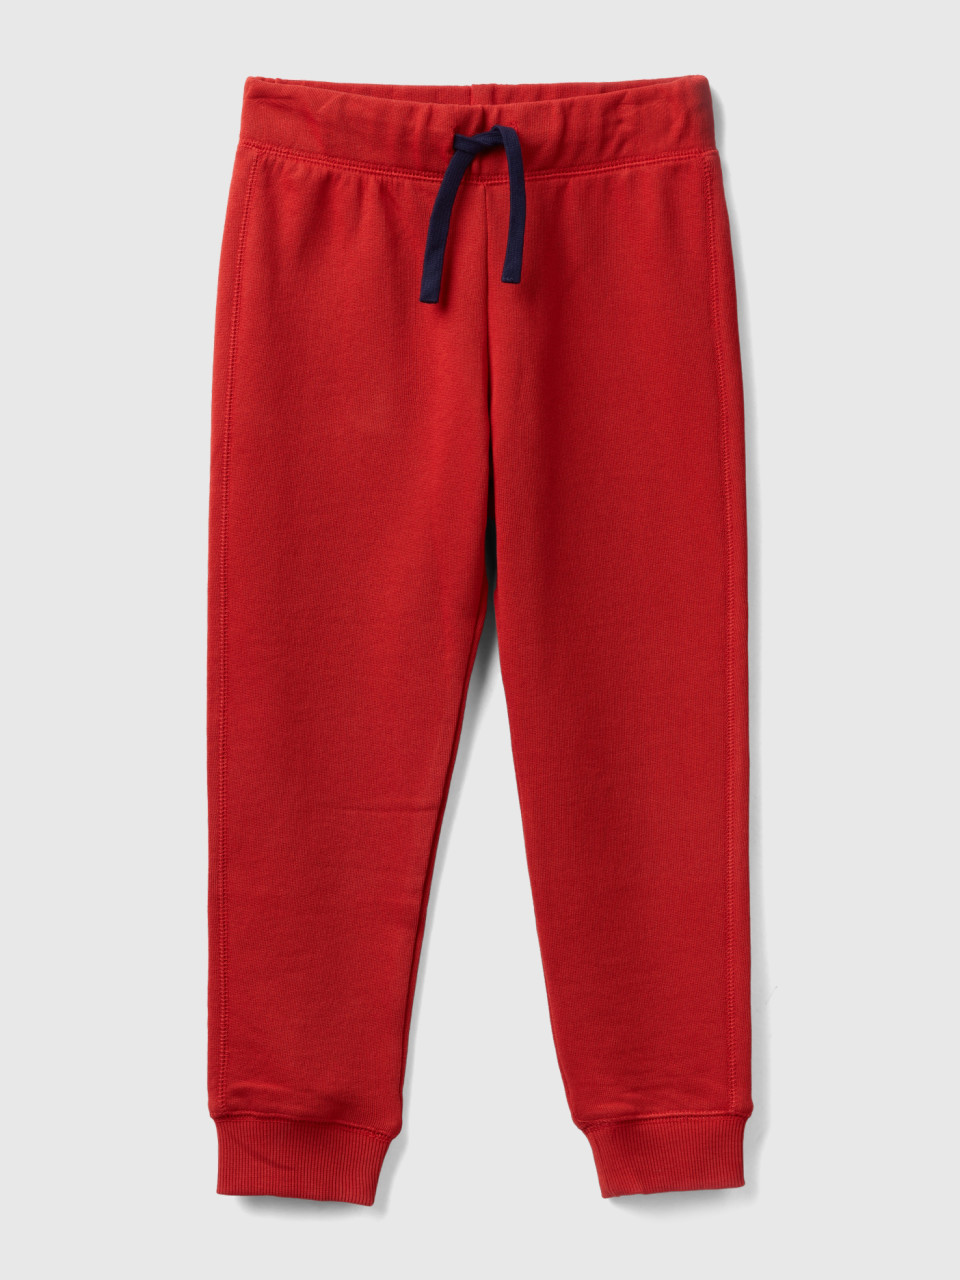 Benetton, 100% Cotton Sweatpants, Brick Red, Kids